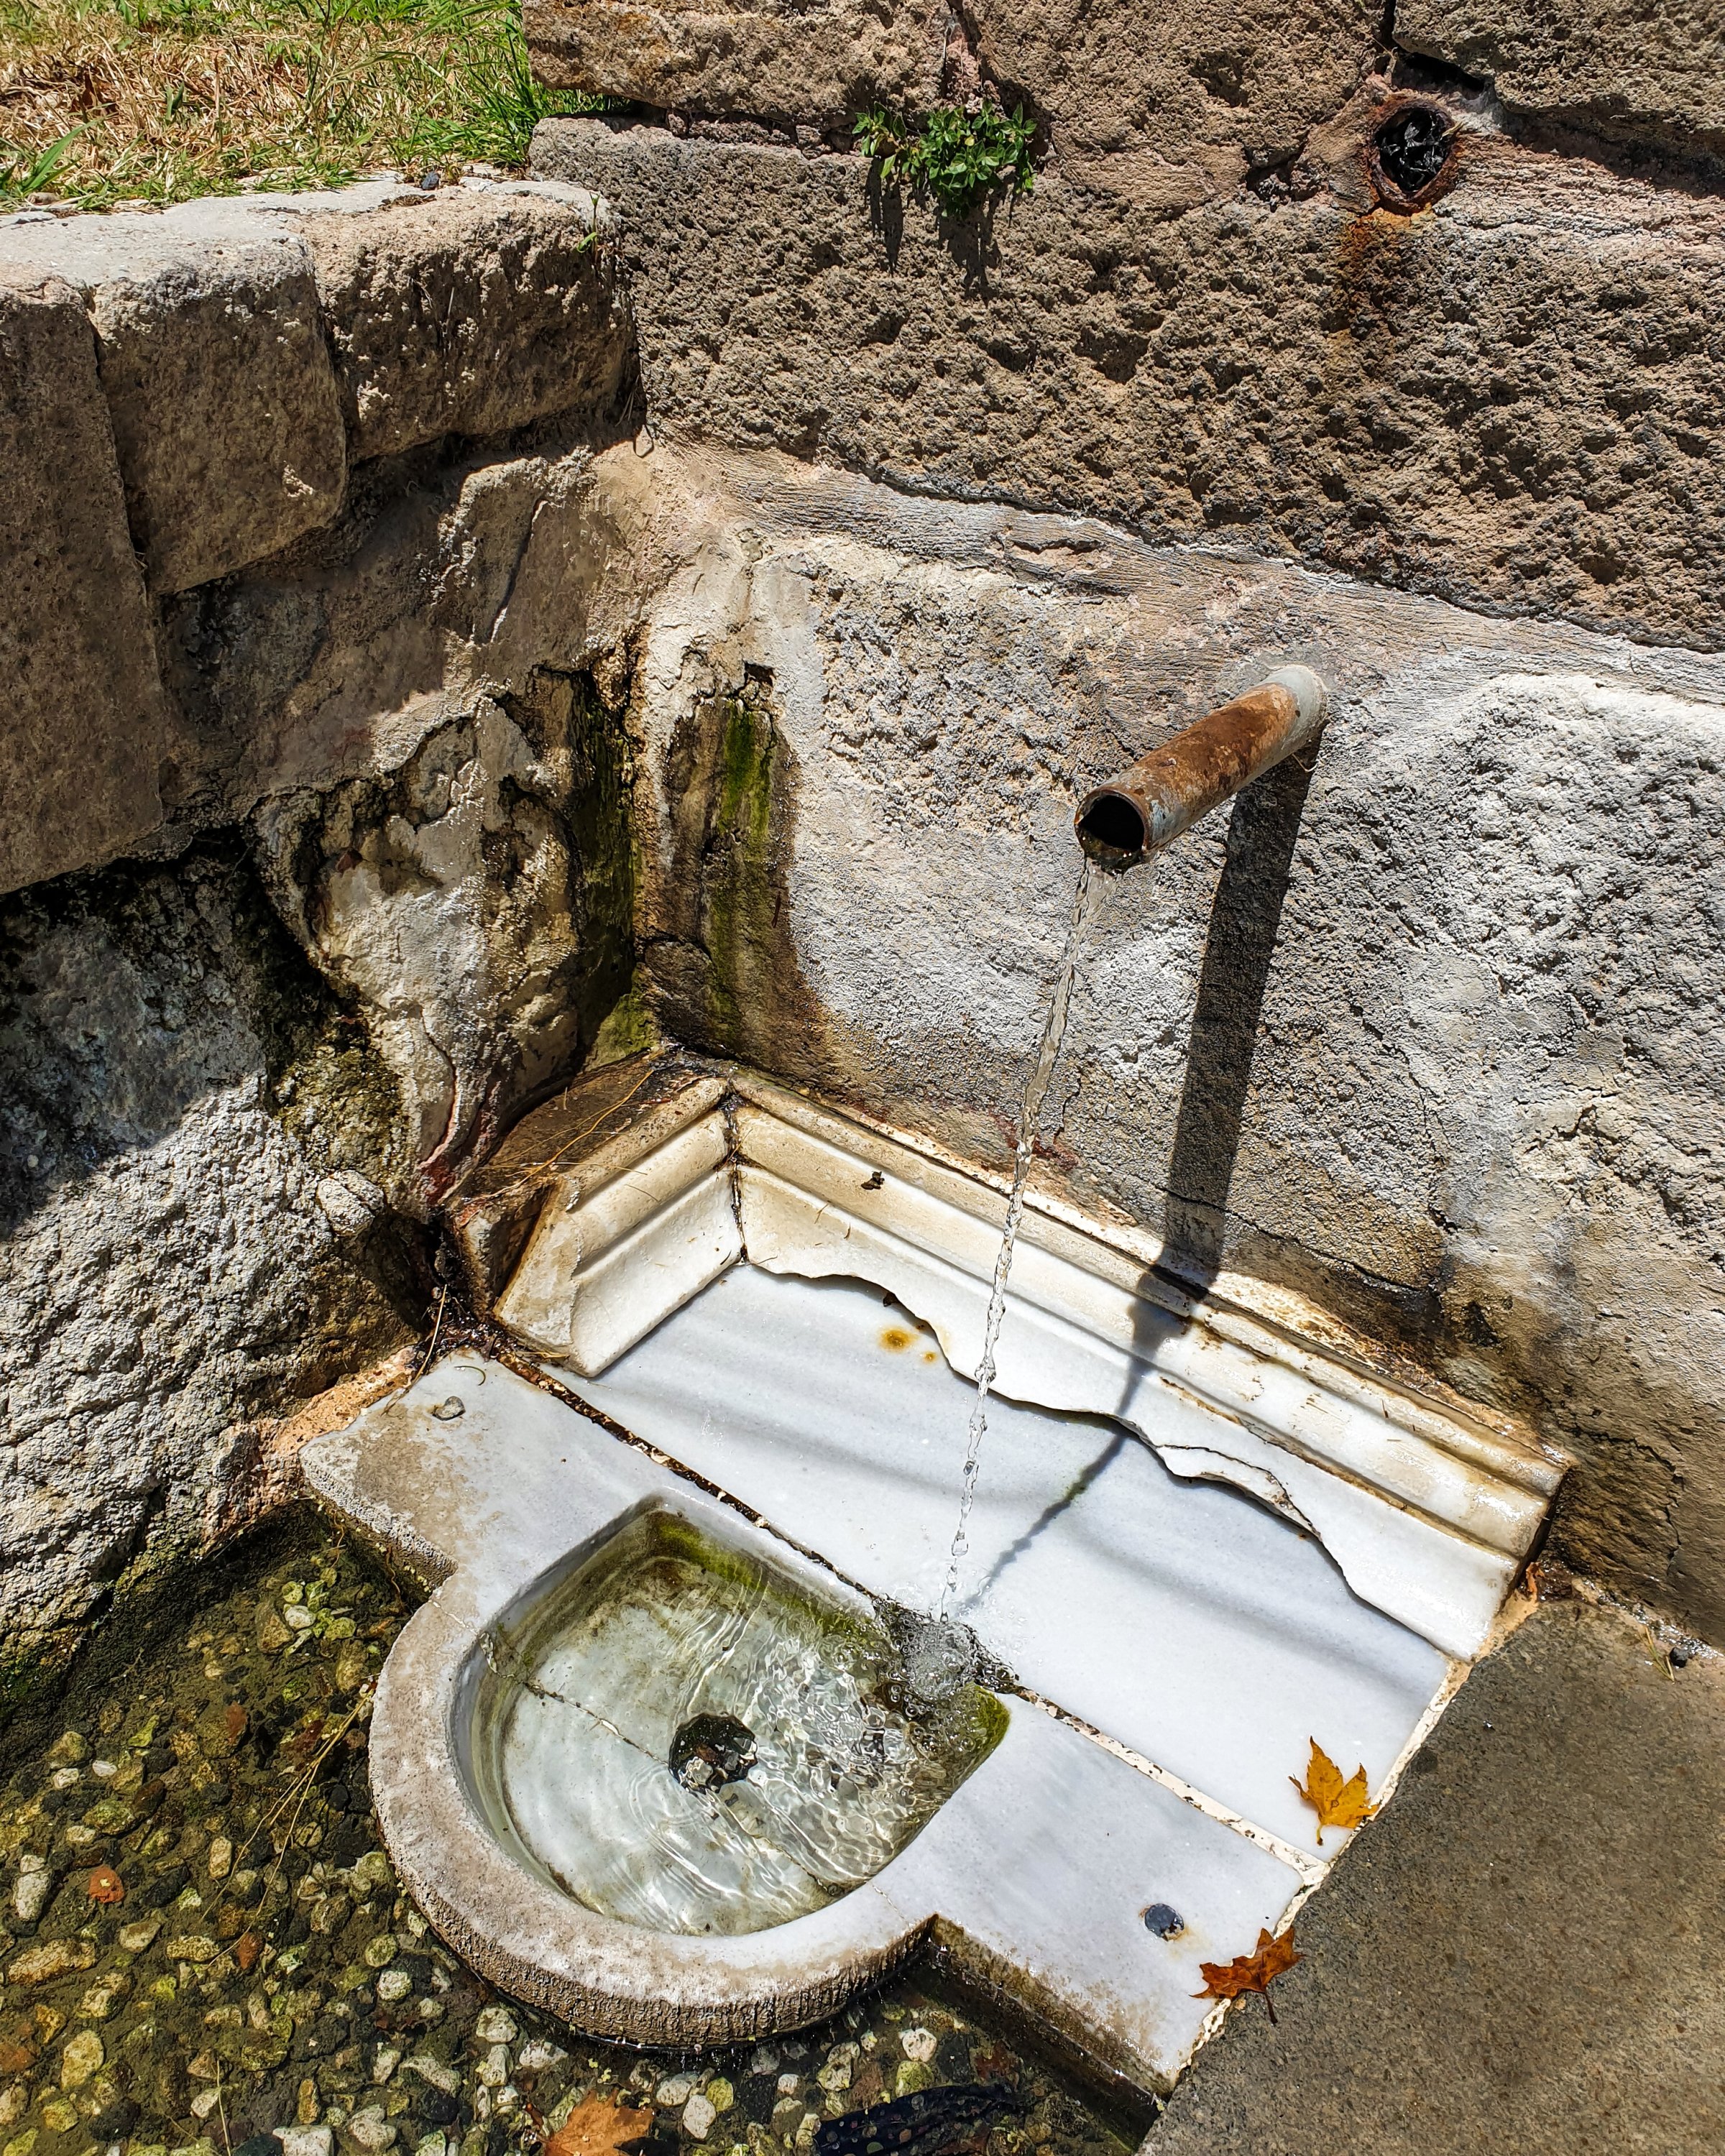 The fountain with healing water at Asklepion, Izmir. (Photo by Argun Konuk)